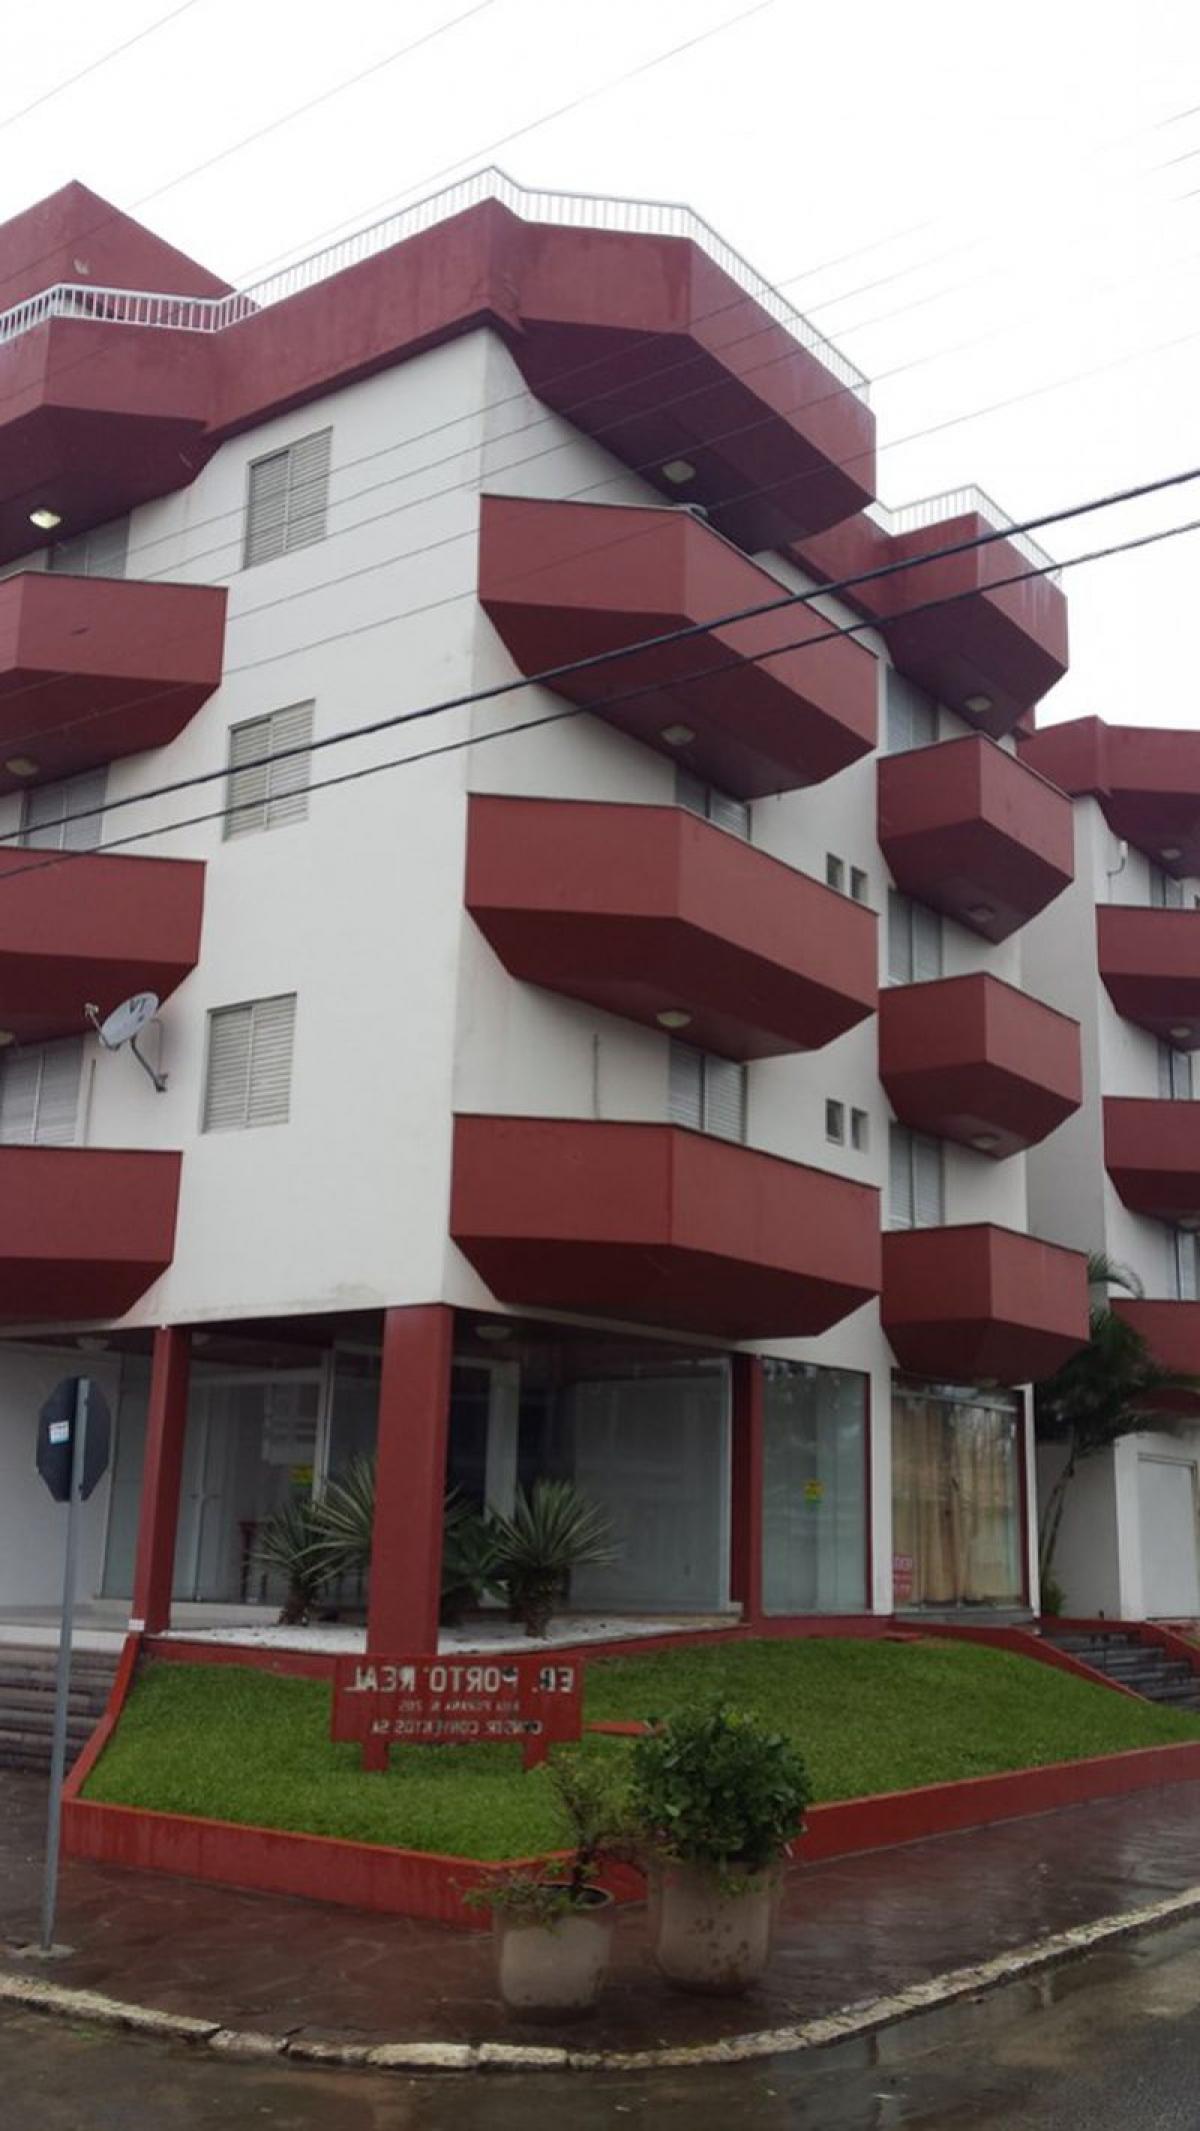 Picture of Apartment For Sale in Içara, Santa Catarina, Brazil